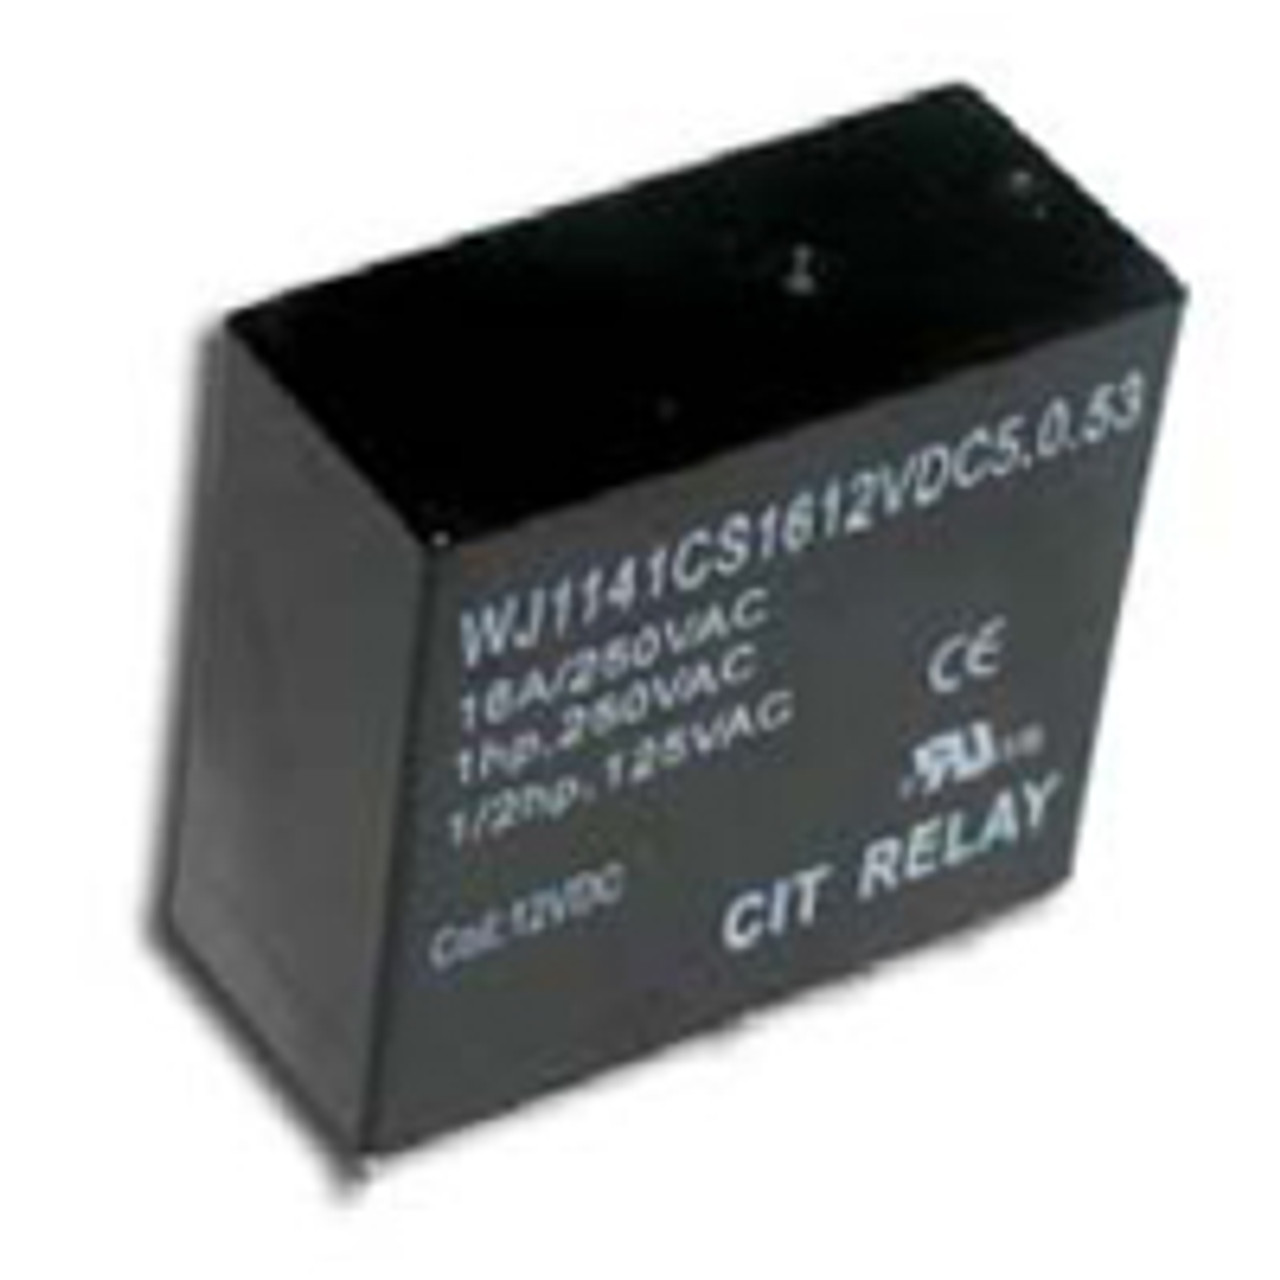 CIT Relay and Switch J1141CS1612VDC5.0.80 Power Relays